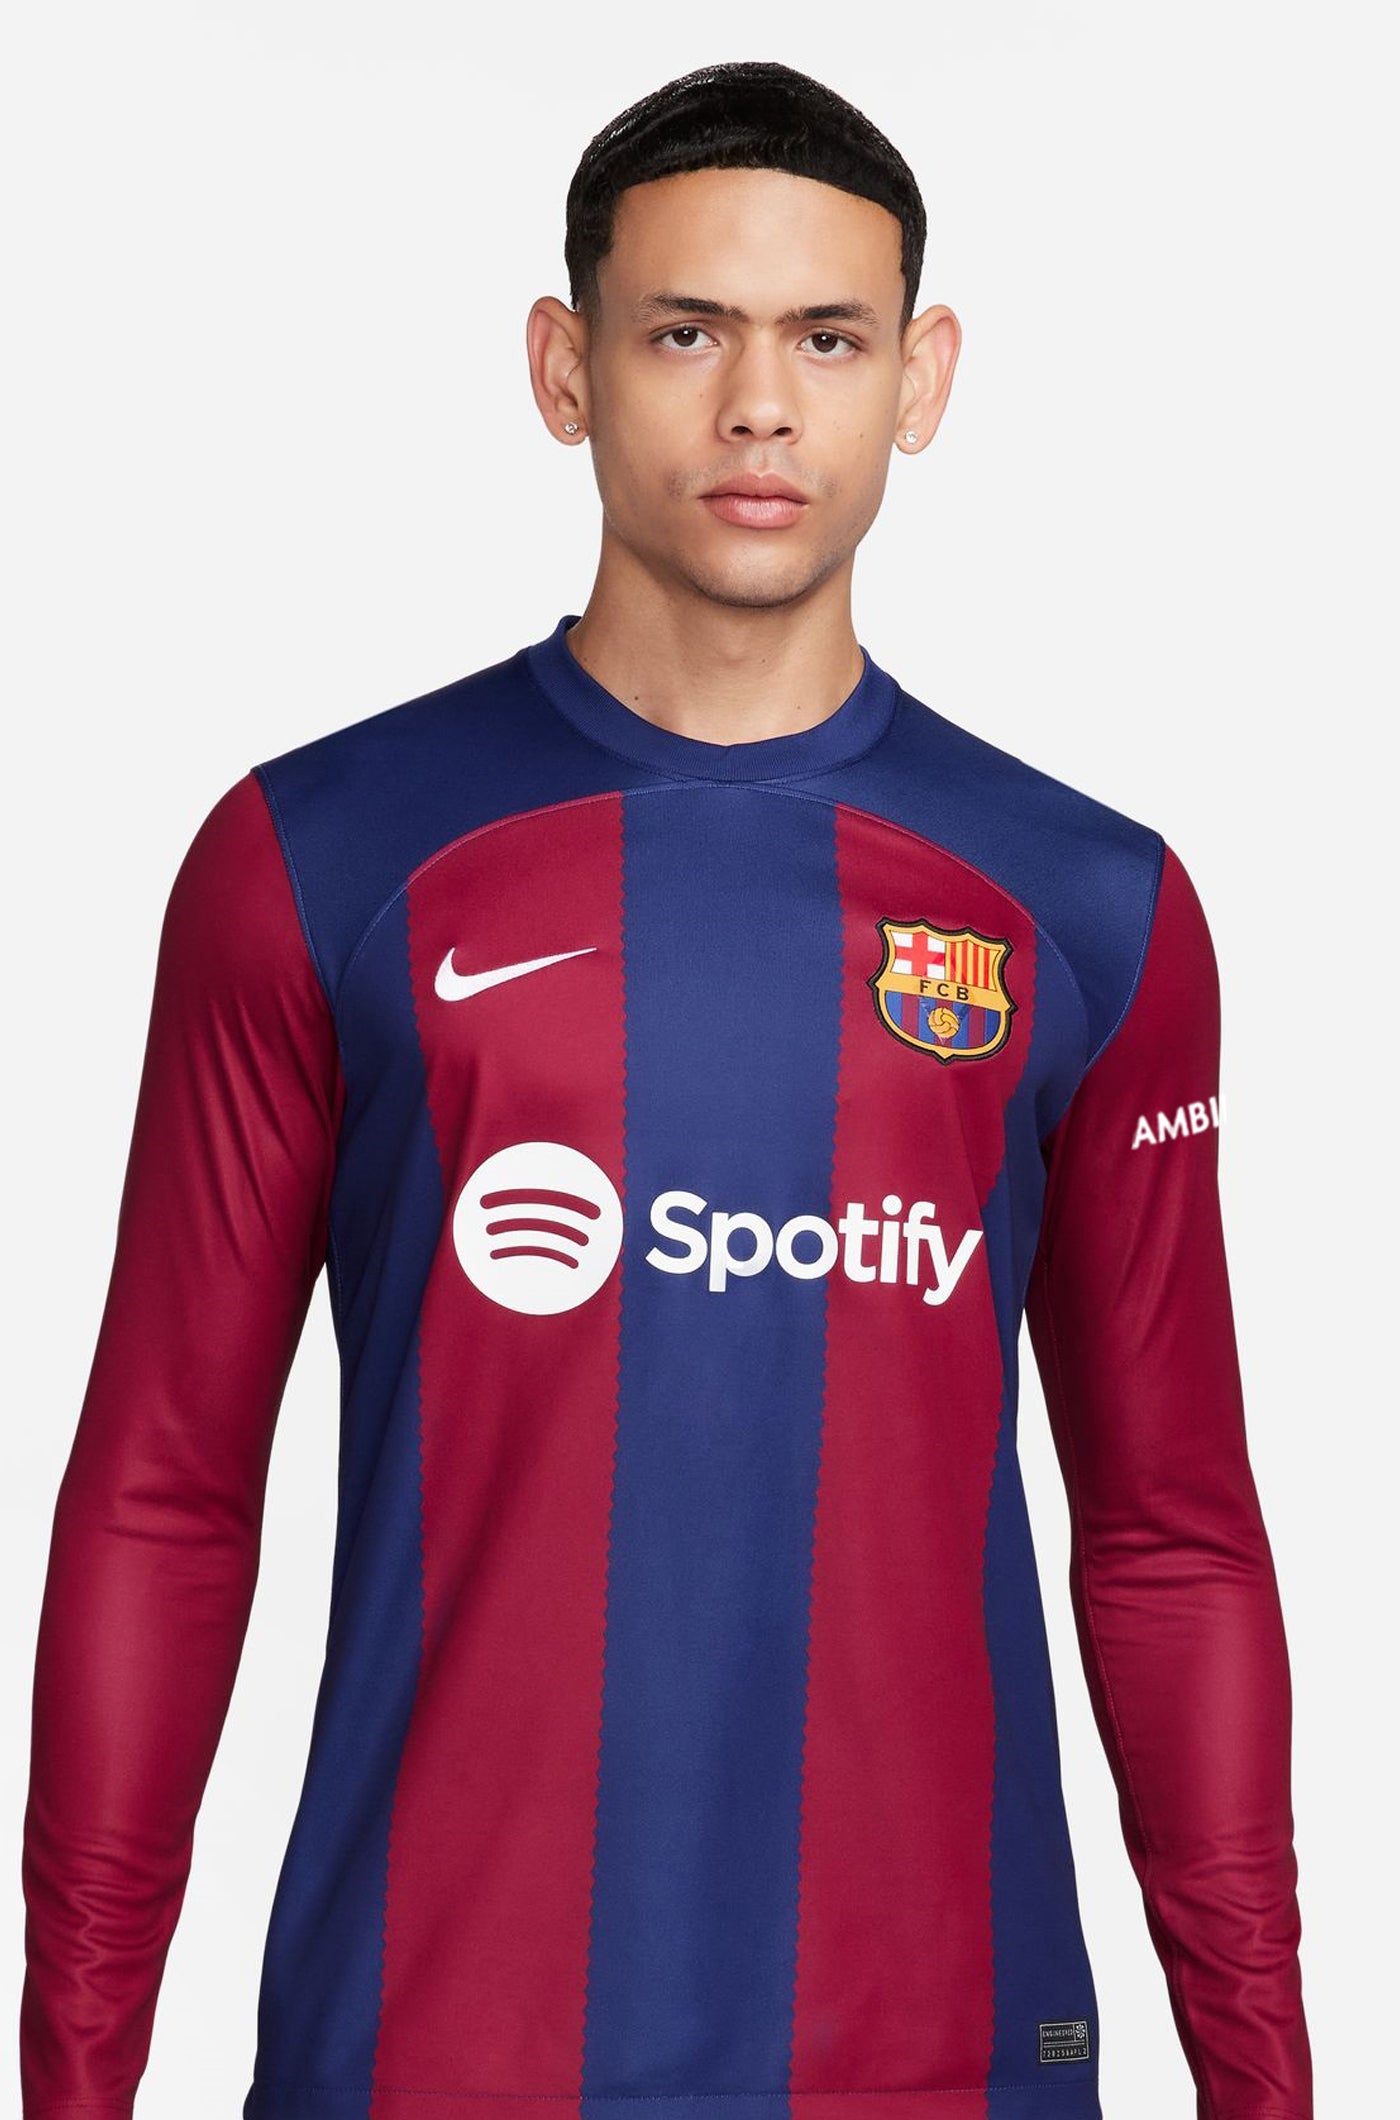 FC Barcelona home shirt 23/24 - Long-sleeve Player's Edition - LAMINE YAMAL